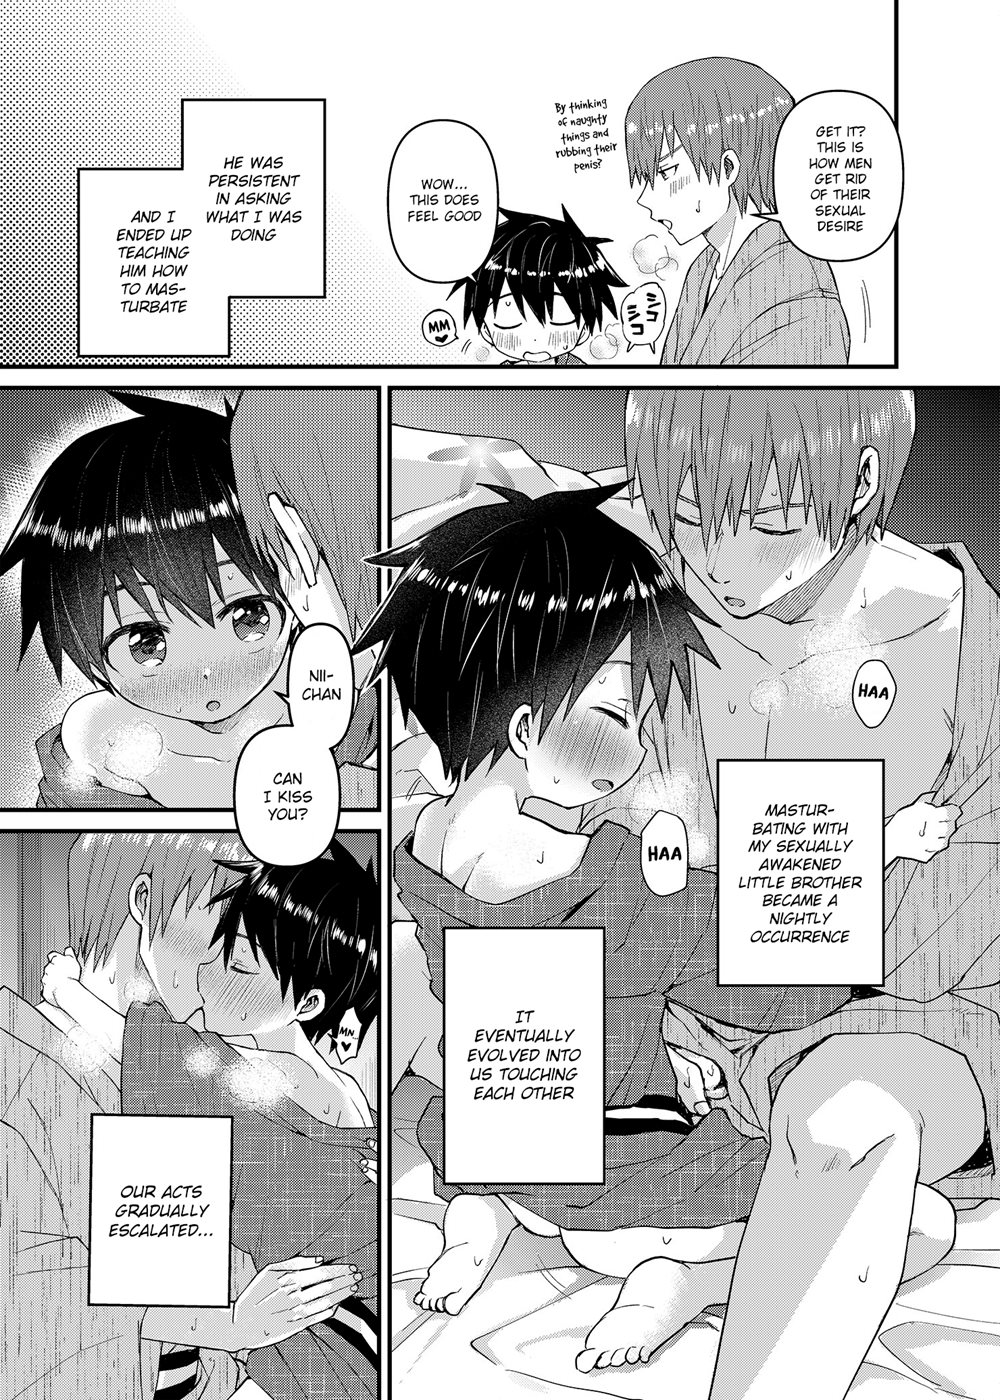 gay hentai manga brother x brother